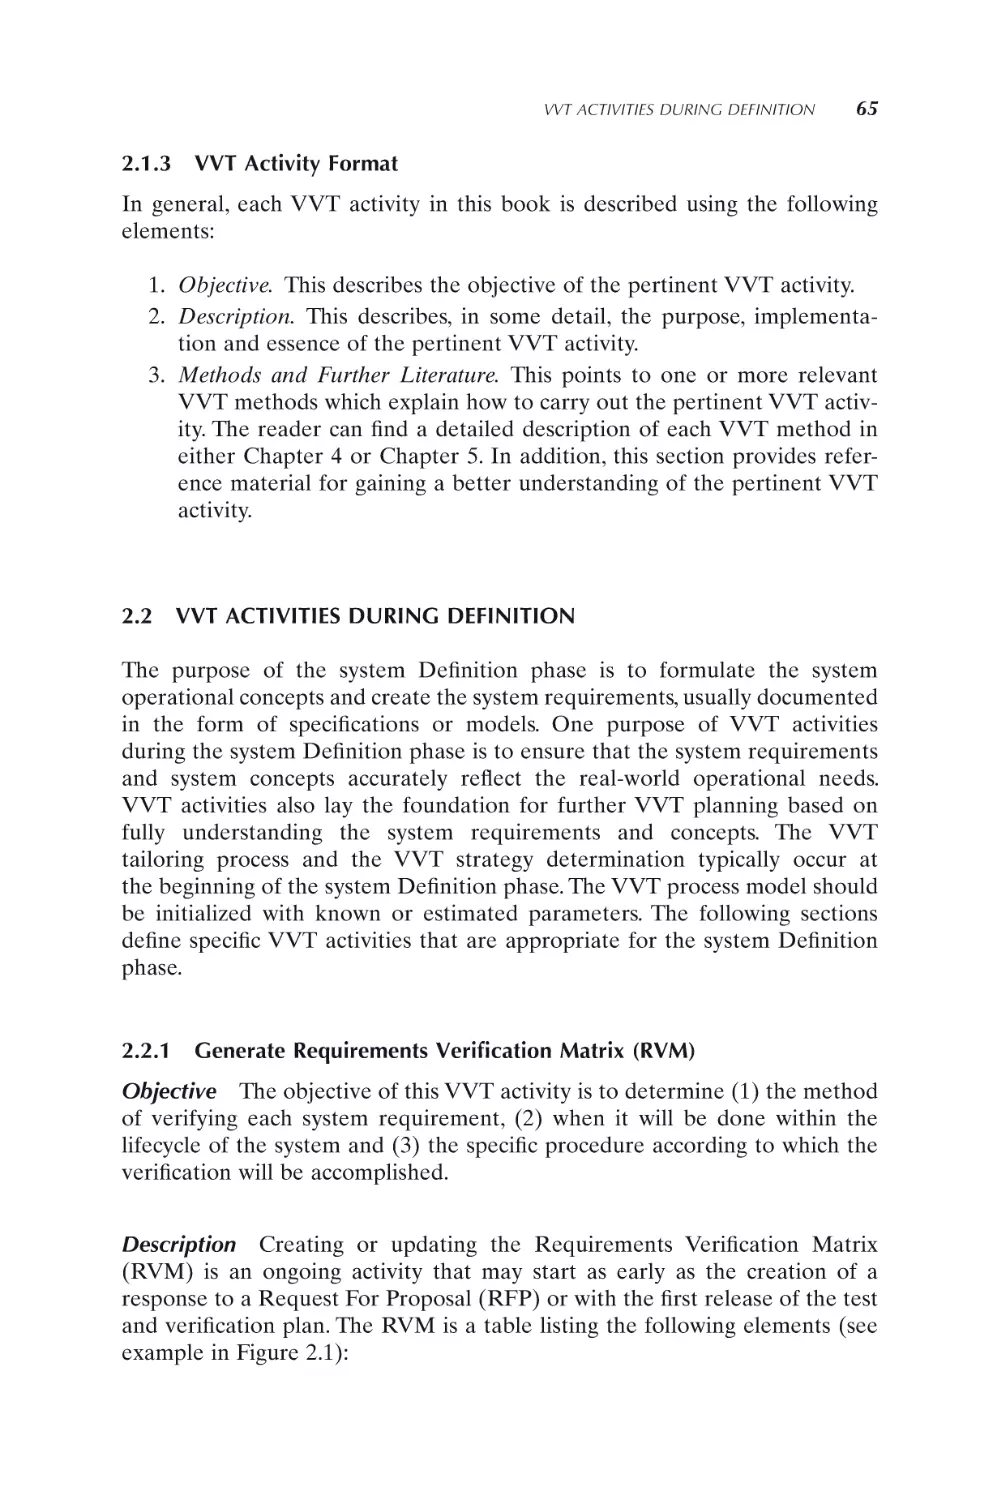 2.1.3 VVT Activity Format
2.2 VVT ACTIVITIES DURING DEFINITION
2.2.1 Generate Requirements Verification Matrix (RVM)